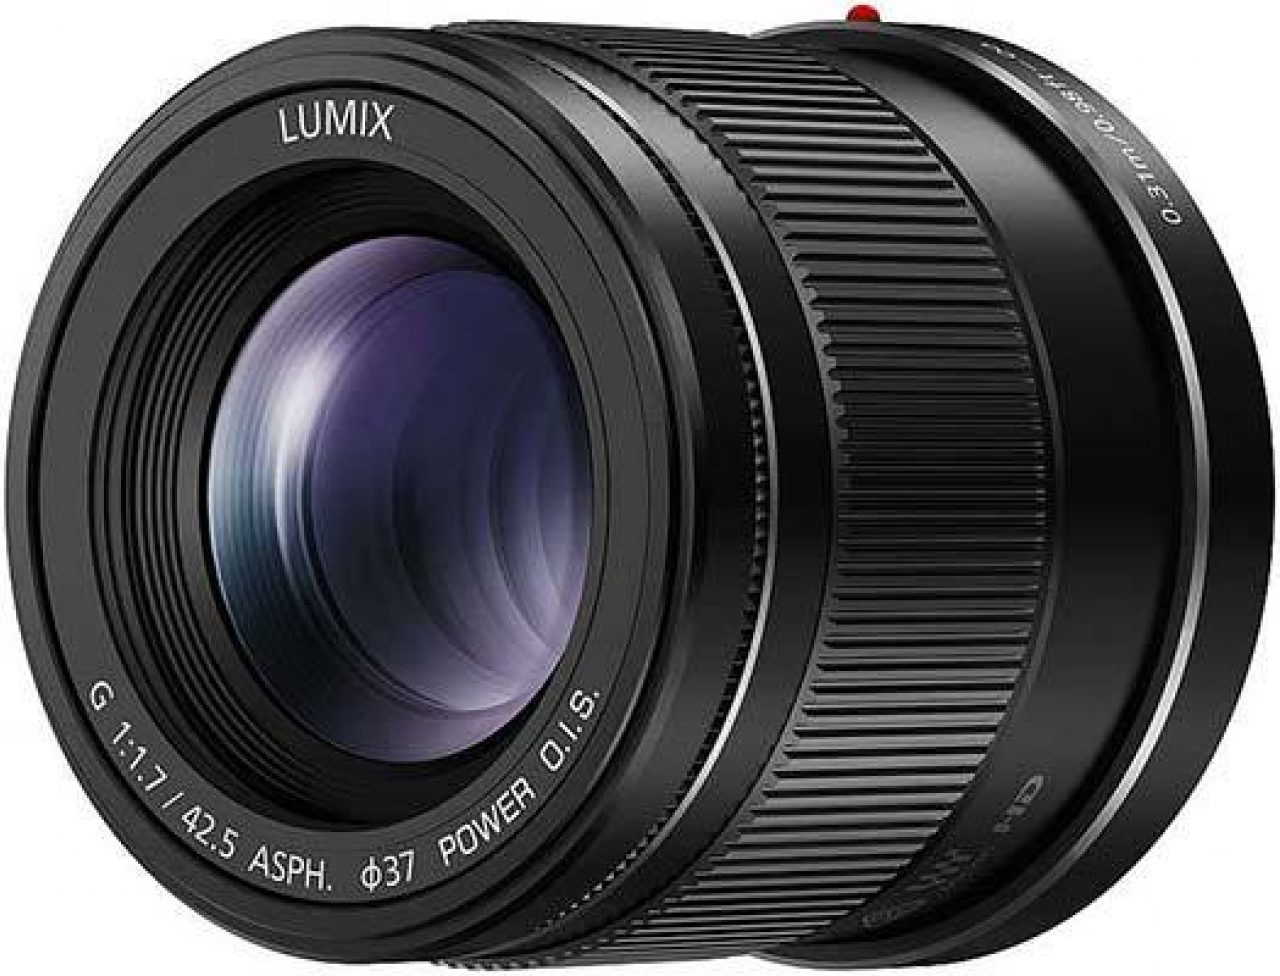 Panasonic LUMIX G 42.5mm f/1.7 ASPH. POWER O.I.S. Review 